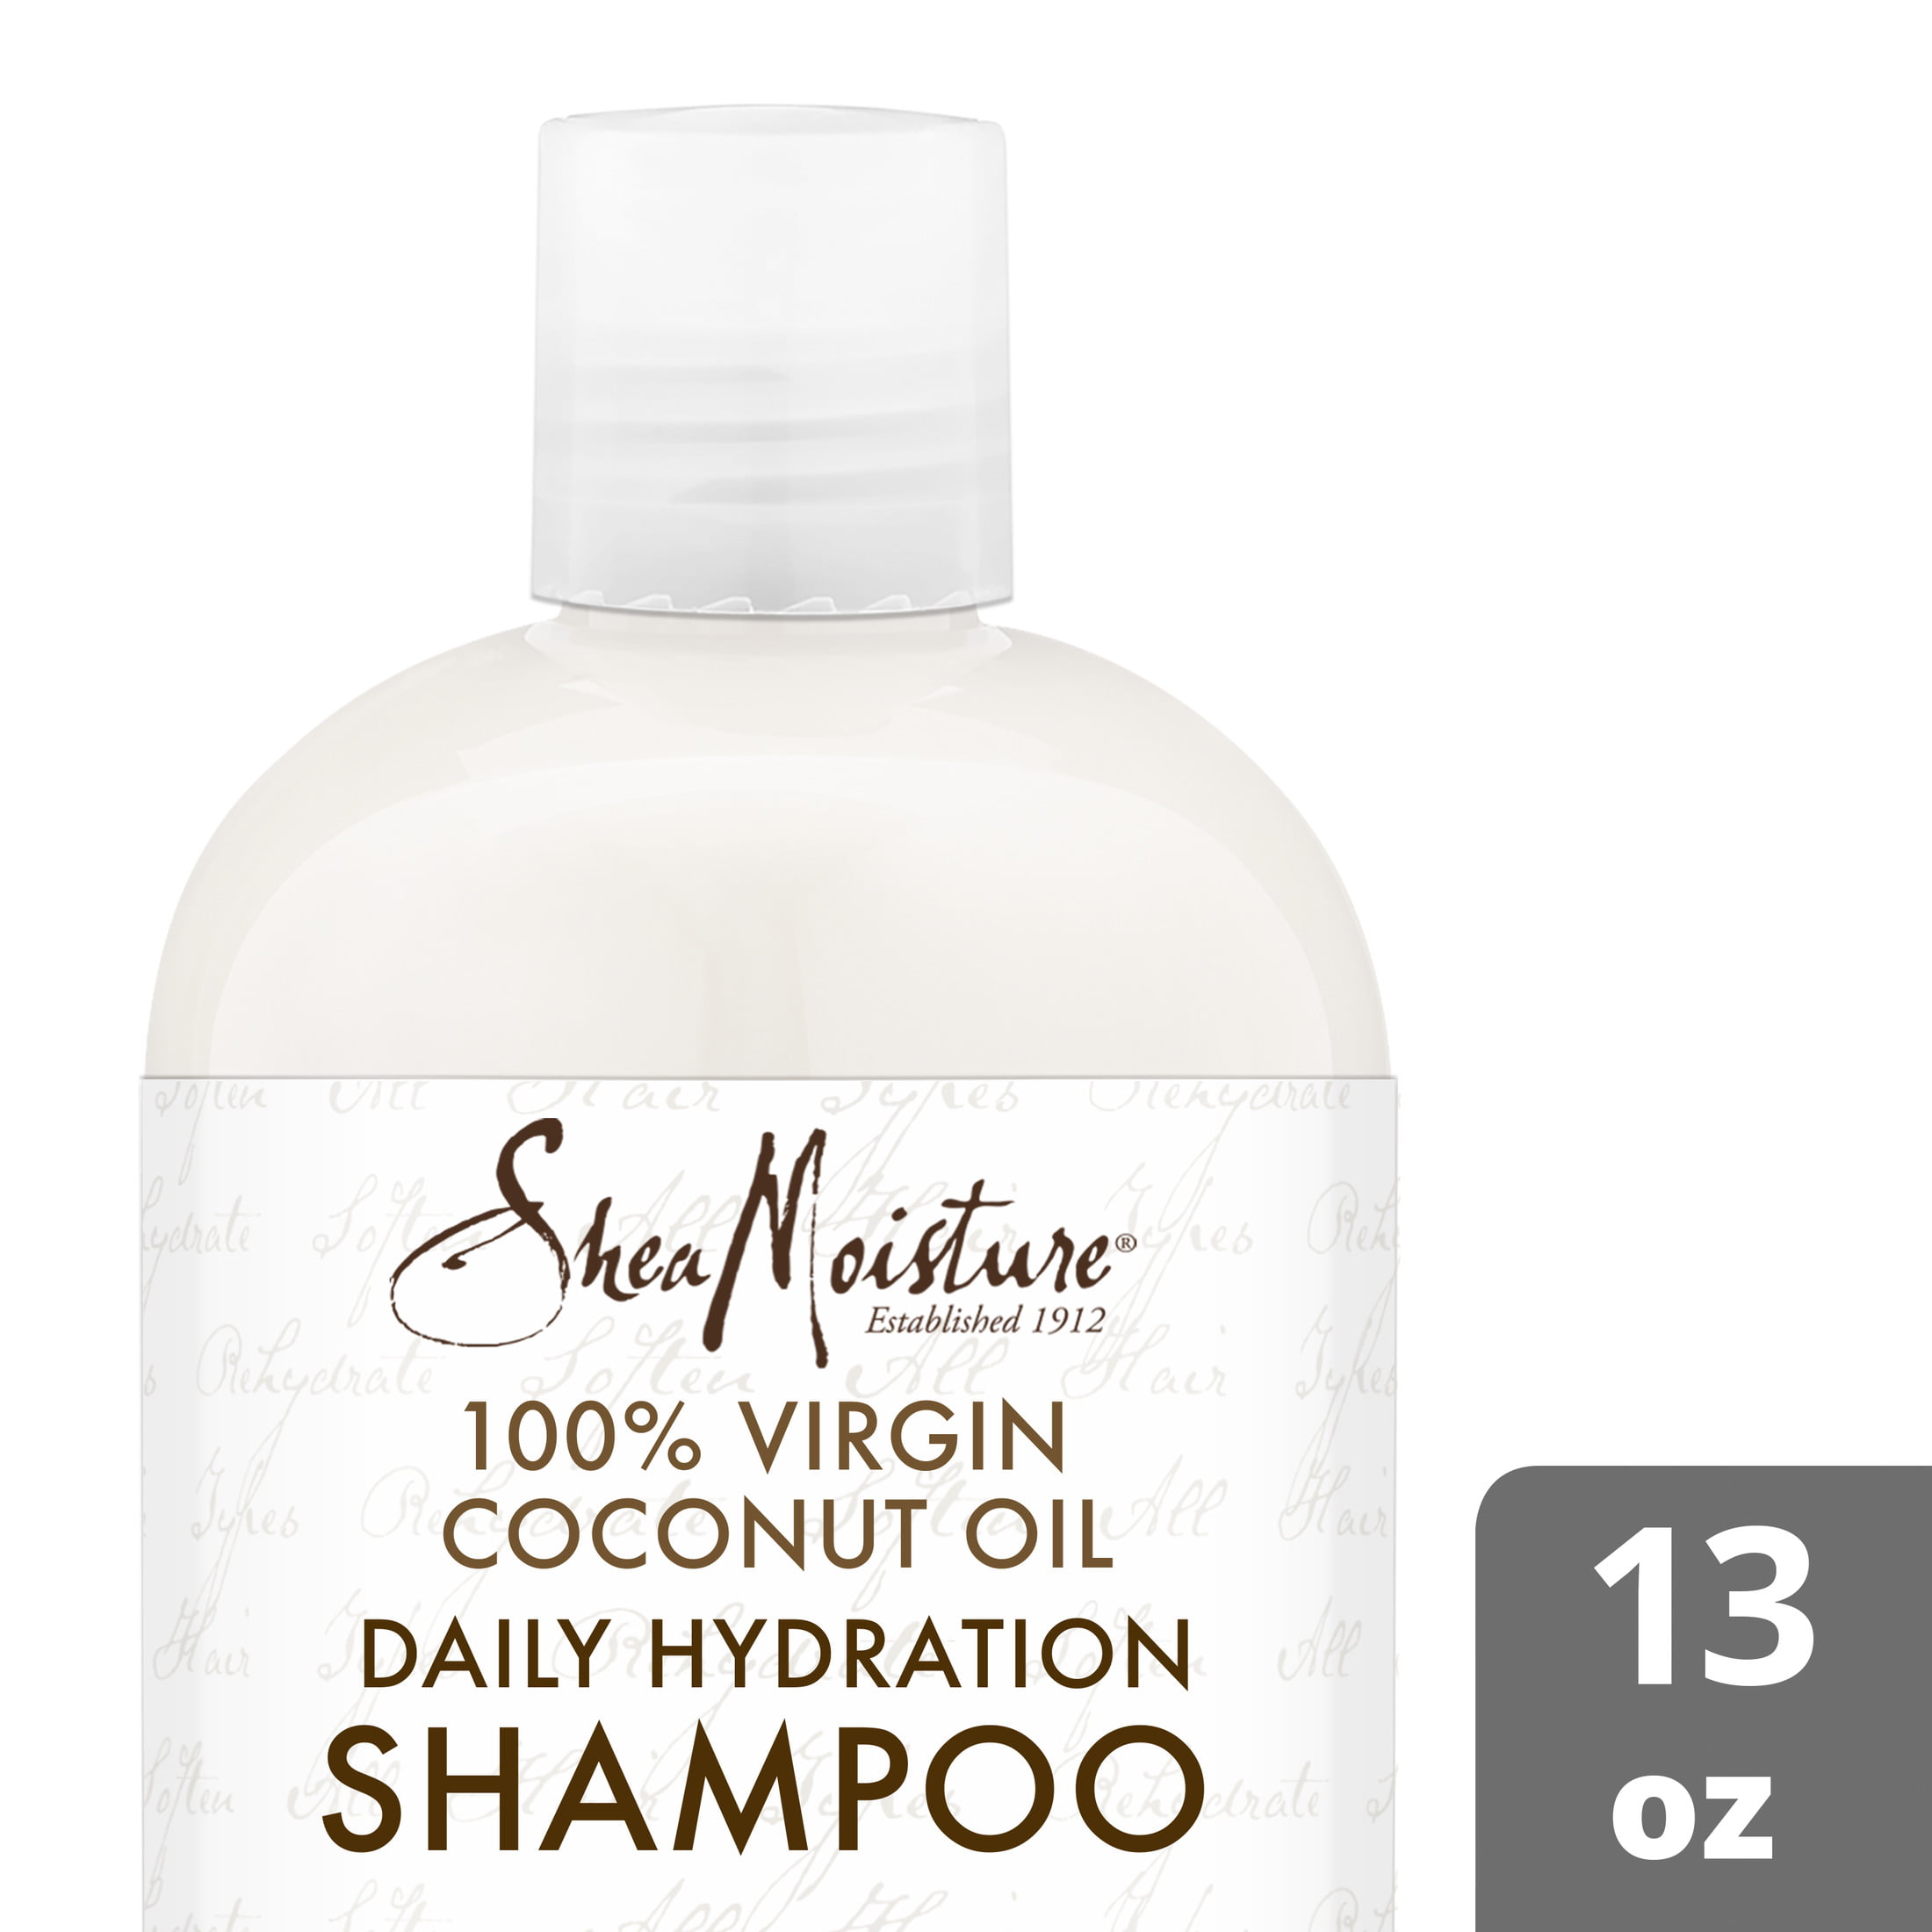 SheaMoisture Daily Hydration Shampoo 100% Virgin Coconut Oil 13 oz -